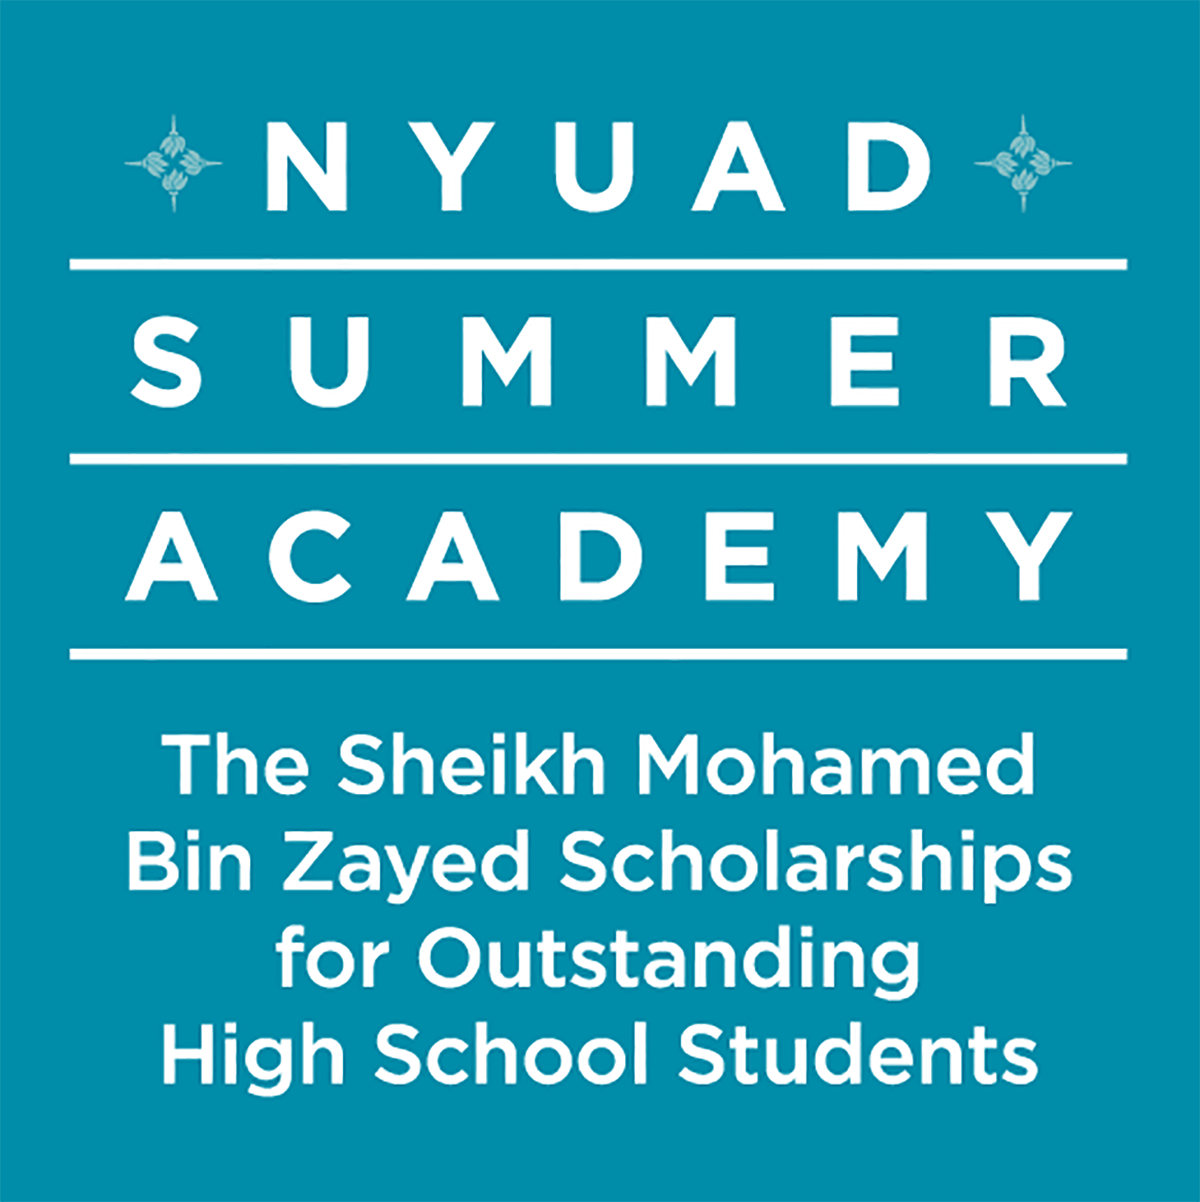 NYUAD Summer Academy